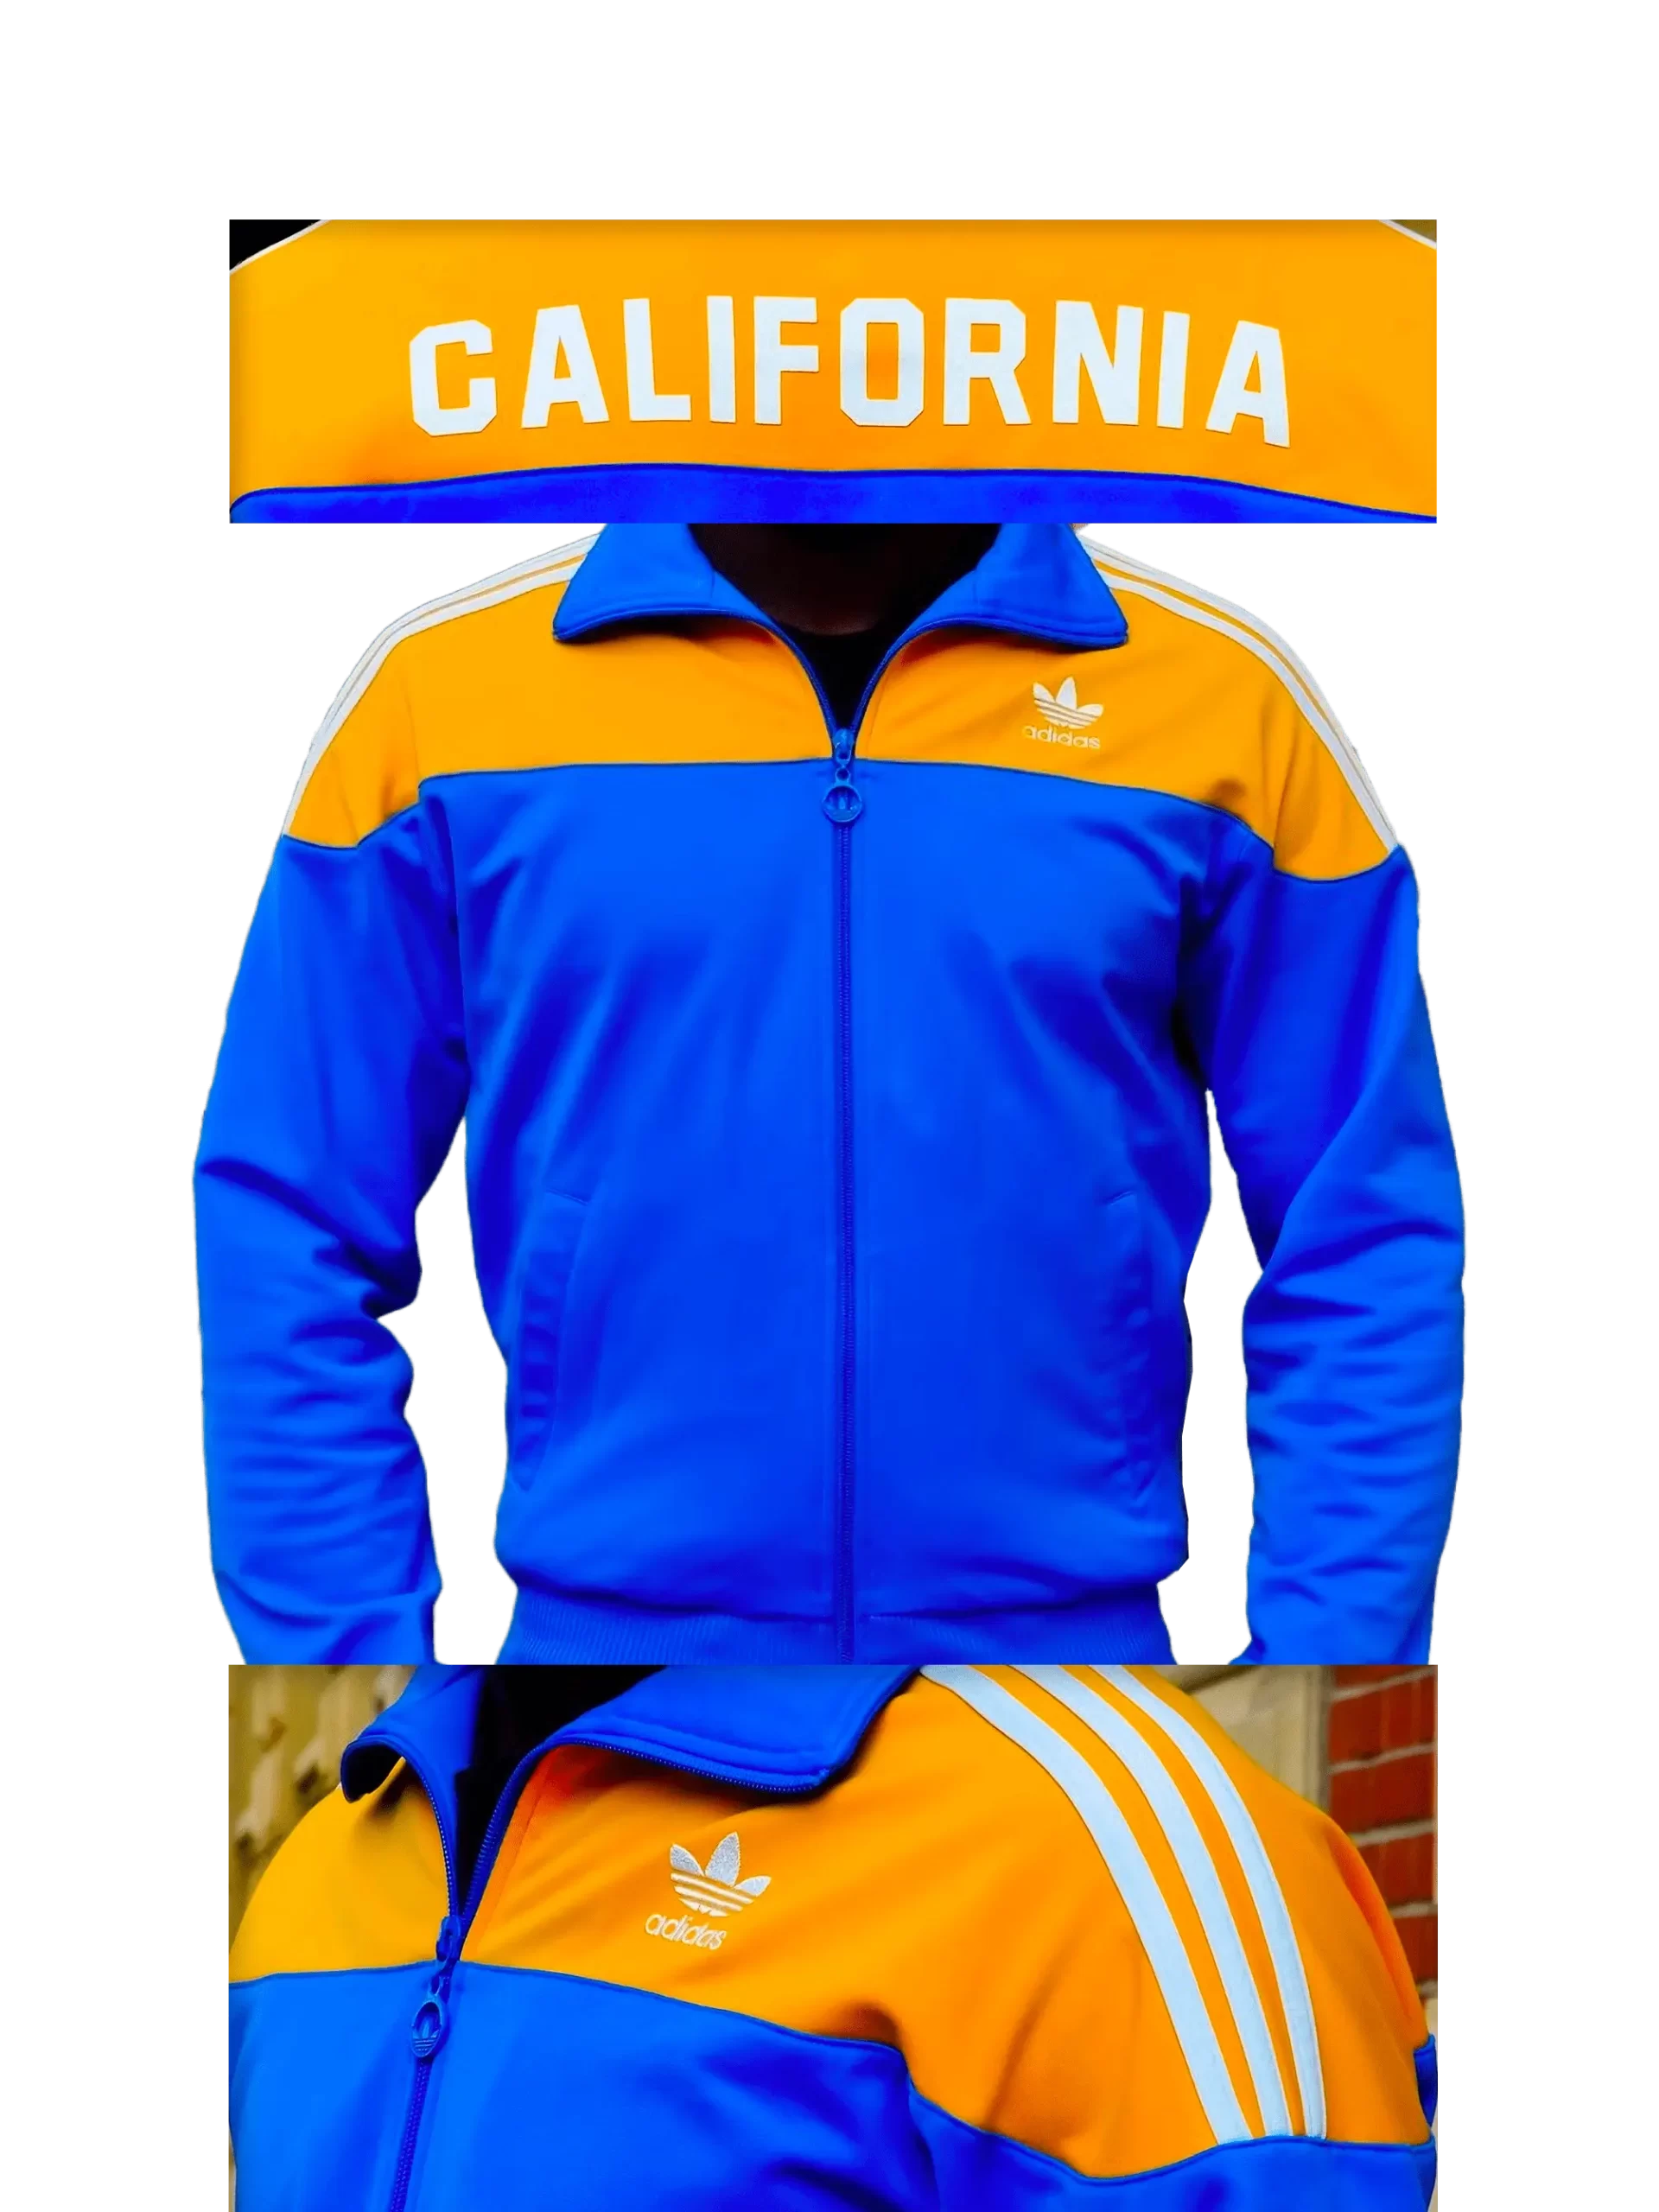 Men's 2005 California State TT by Adidas Originals: Simplistic (EnLawded.com file #lmchk80121ip2y124875kg9st)